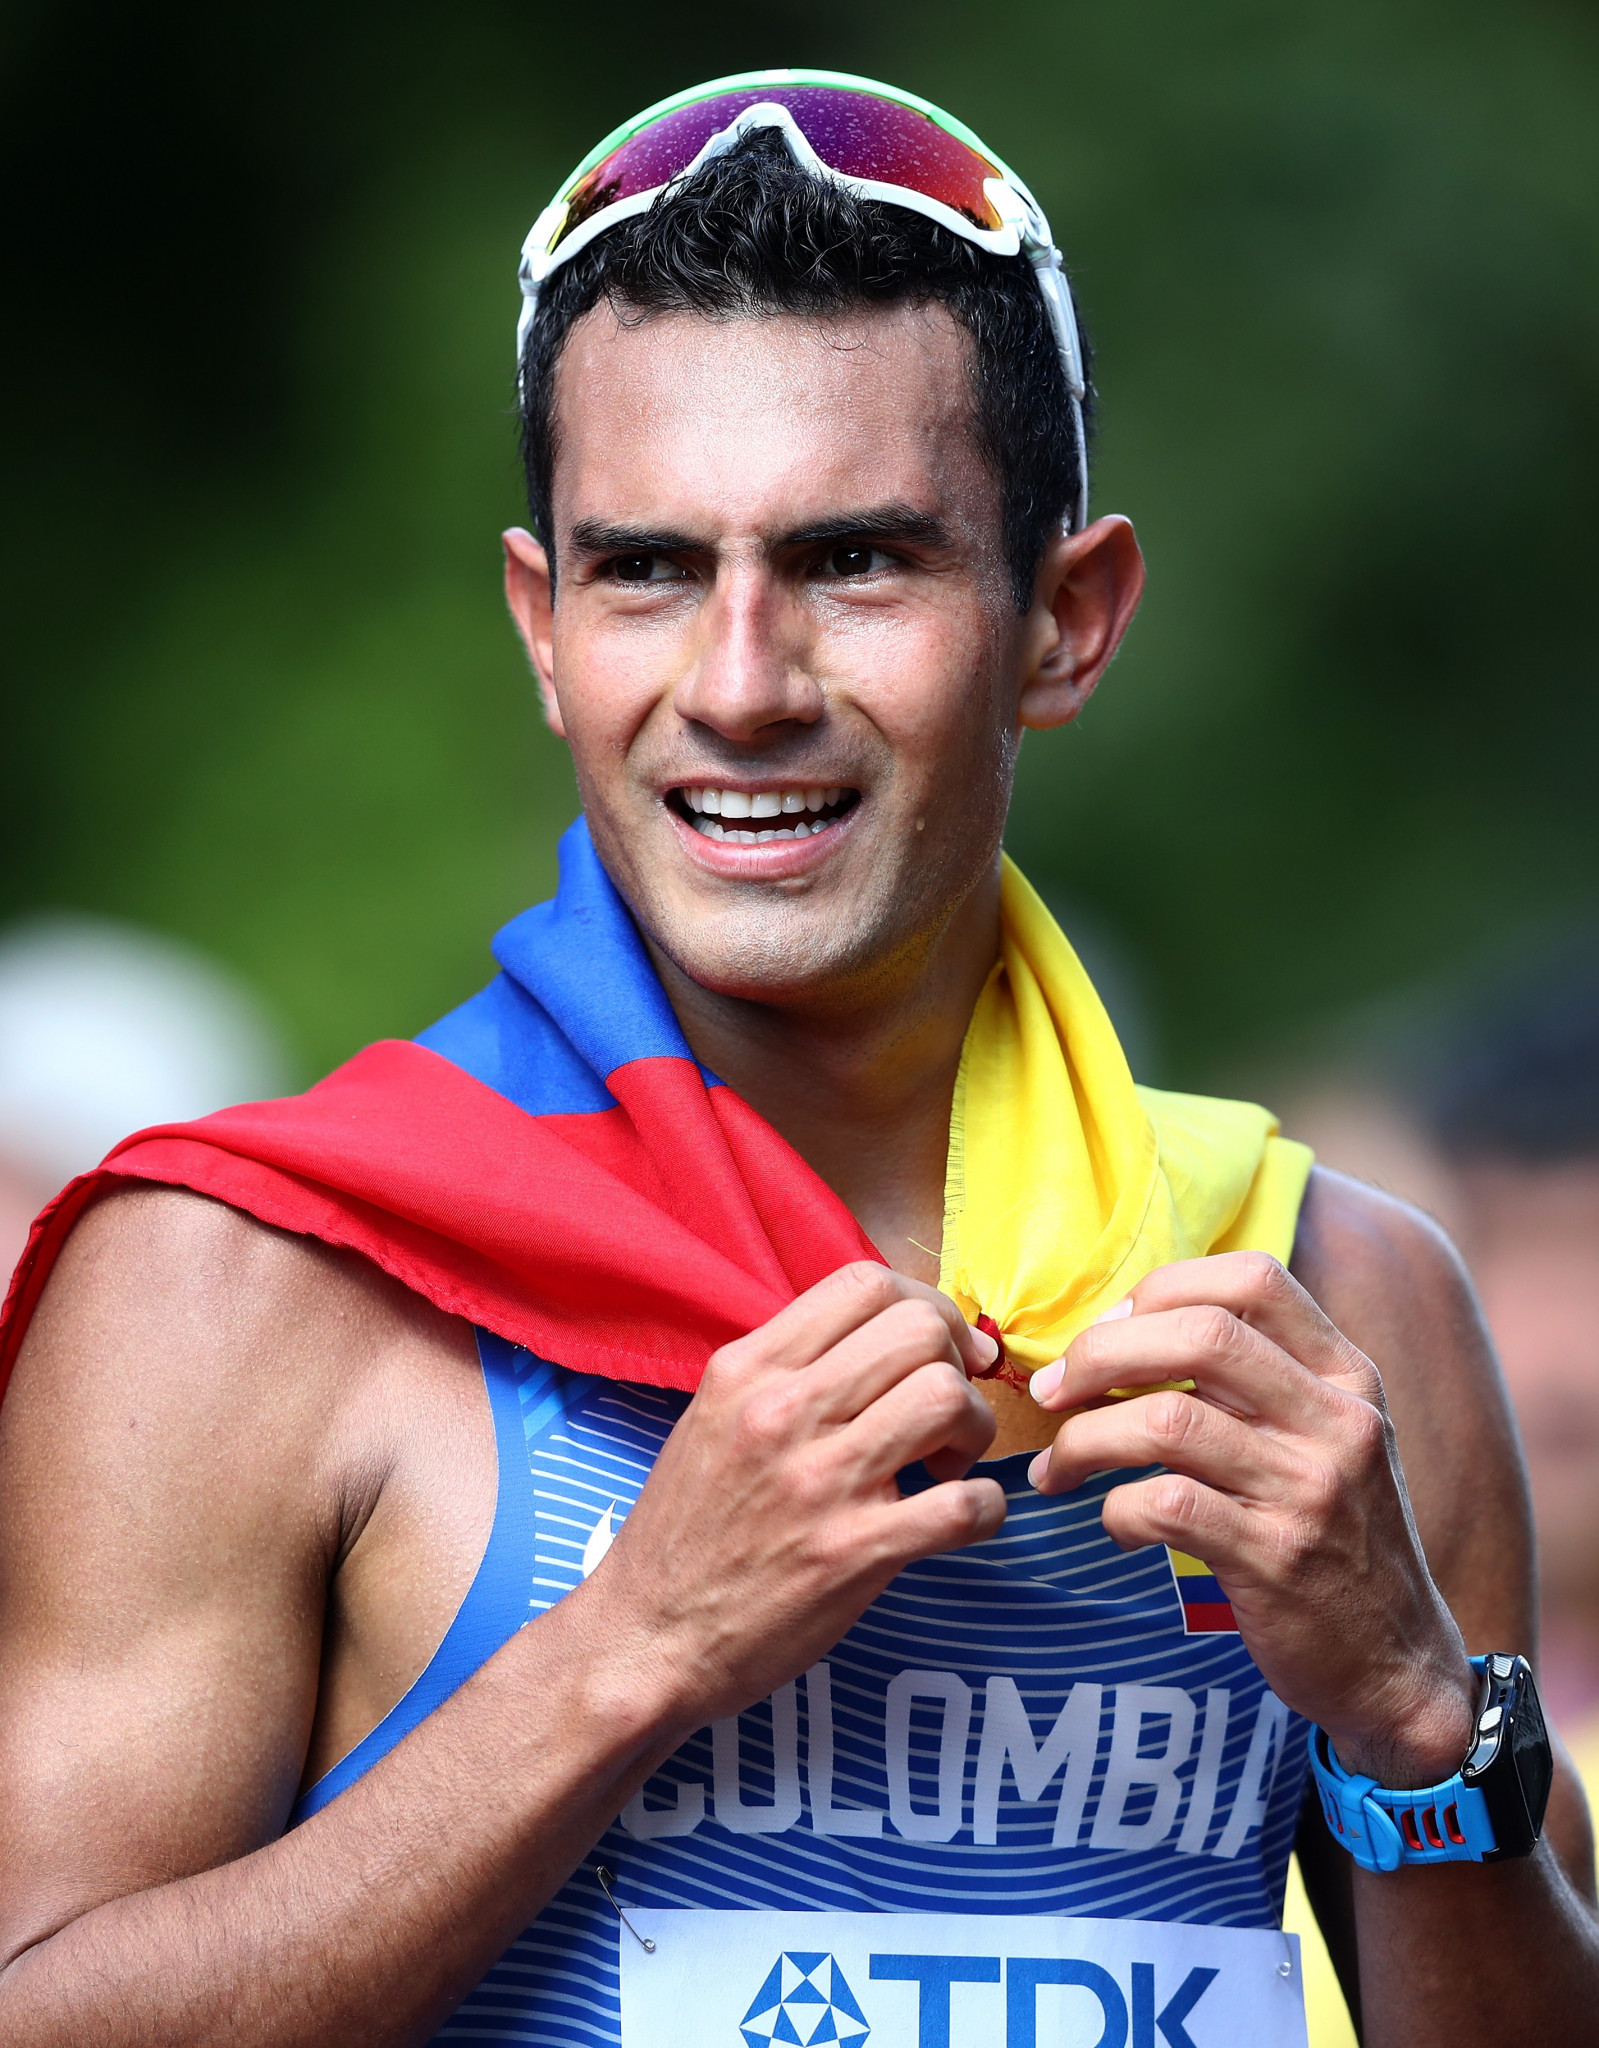 World champion Arévalo among field at IAAF Race Walking Challenge in La Coruña